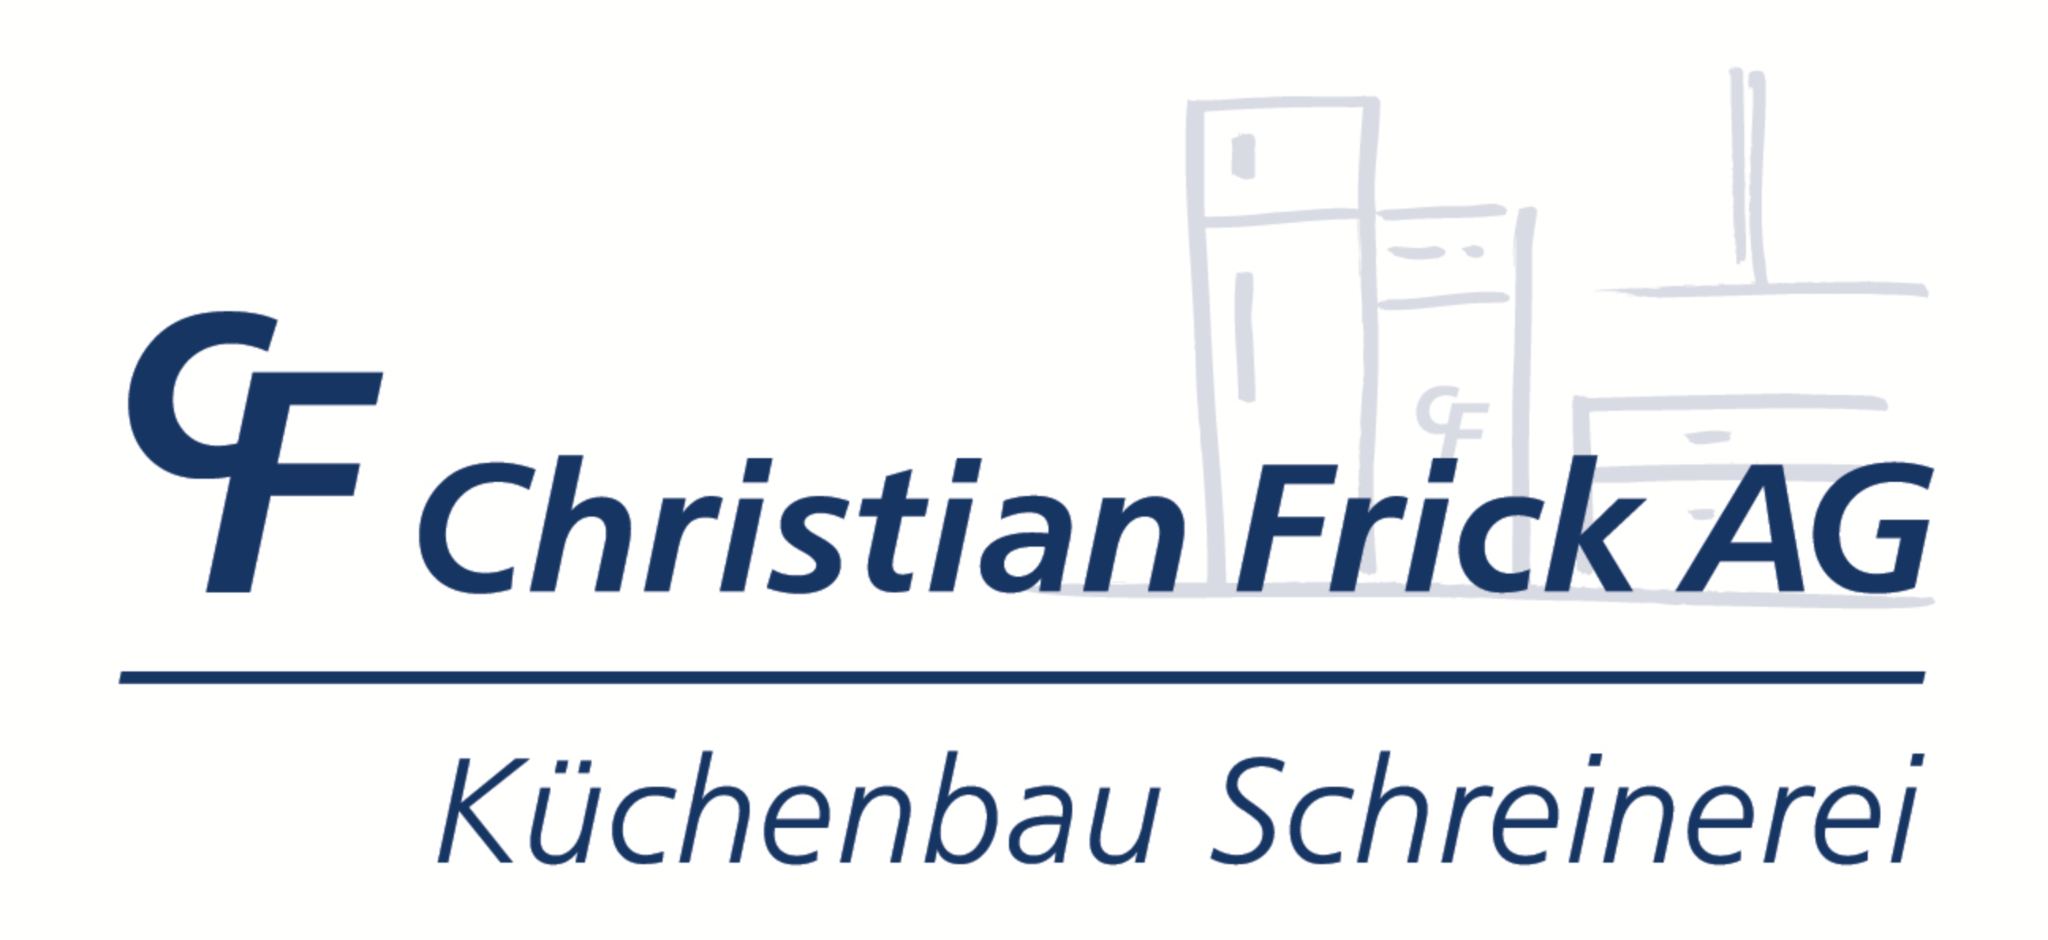 Christian Frick AG Küchenbau Schreinerei